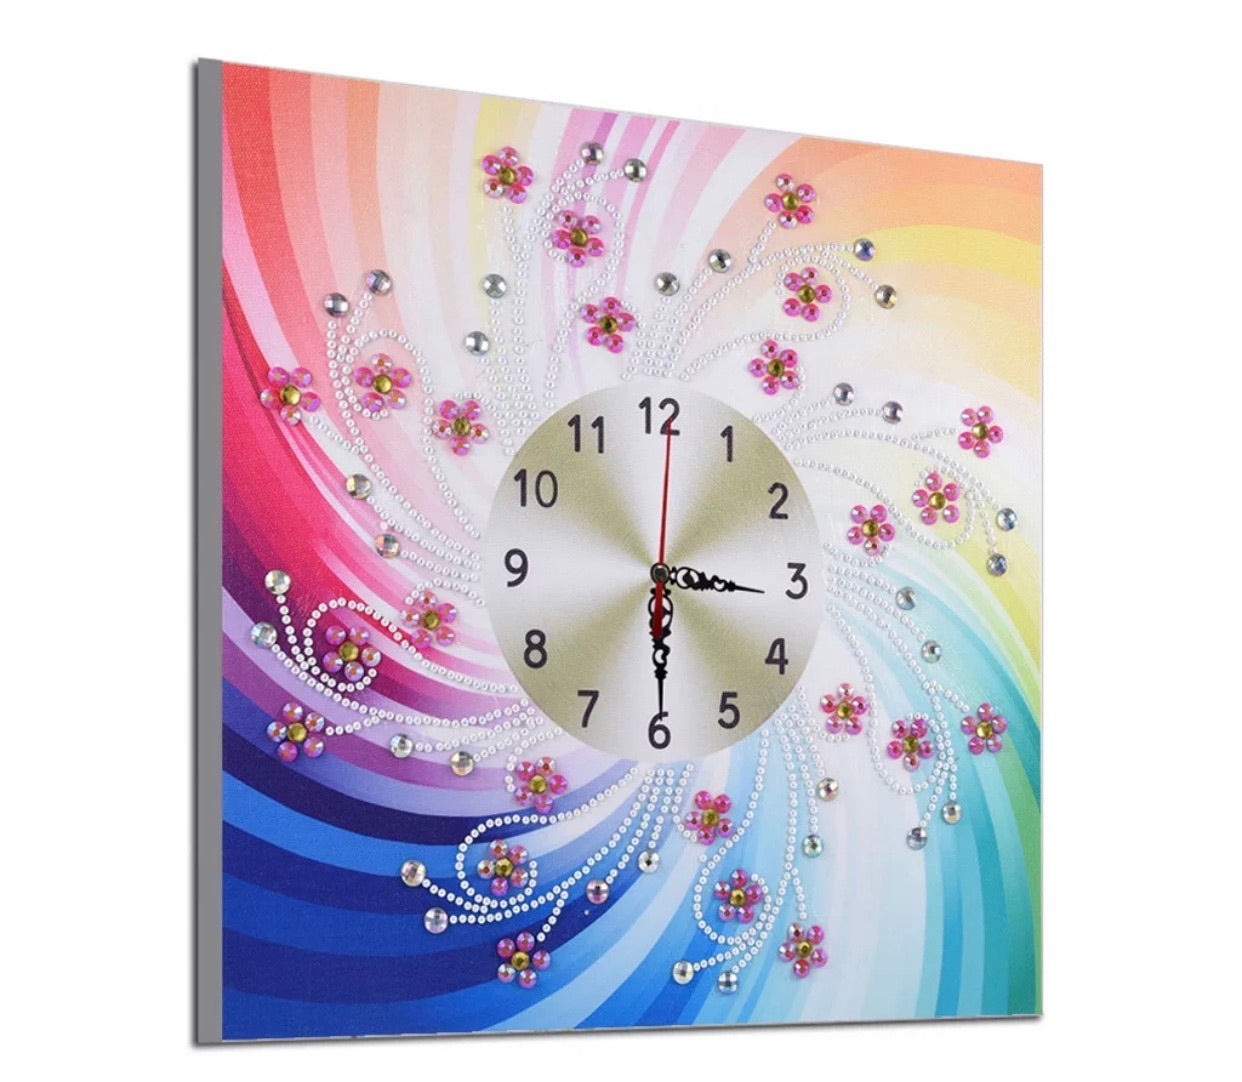 35 x 35 diamond painting clock (rhinestone) - pink and purple DZ076